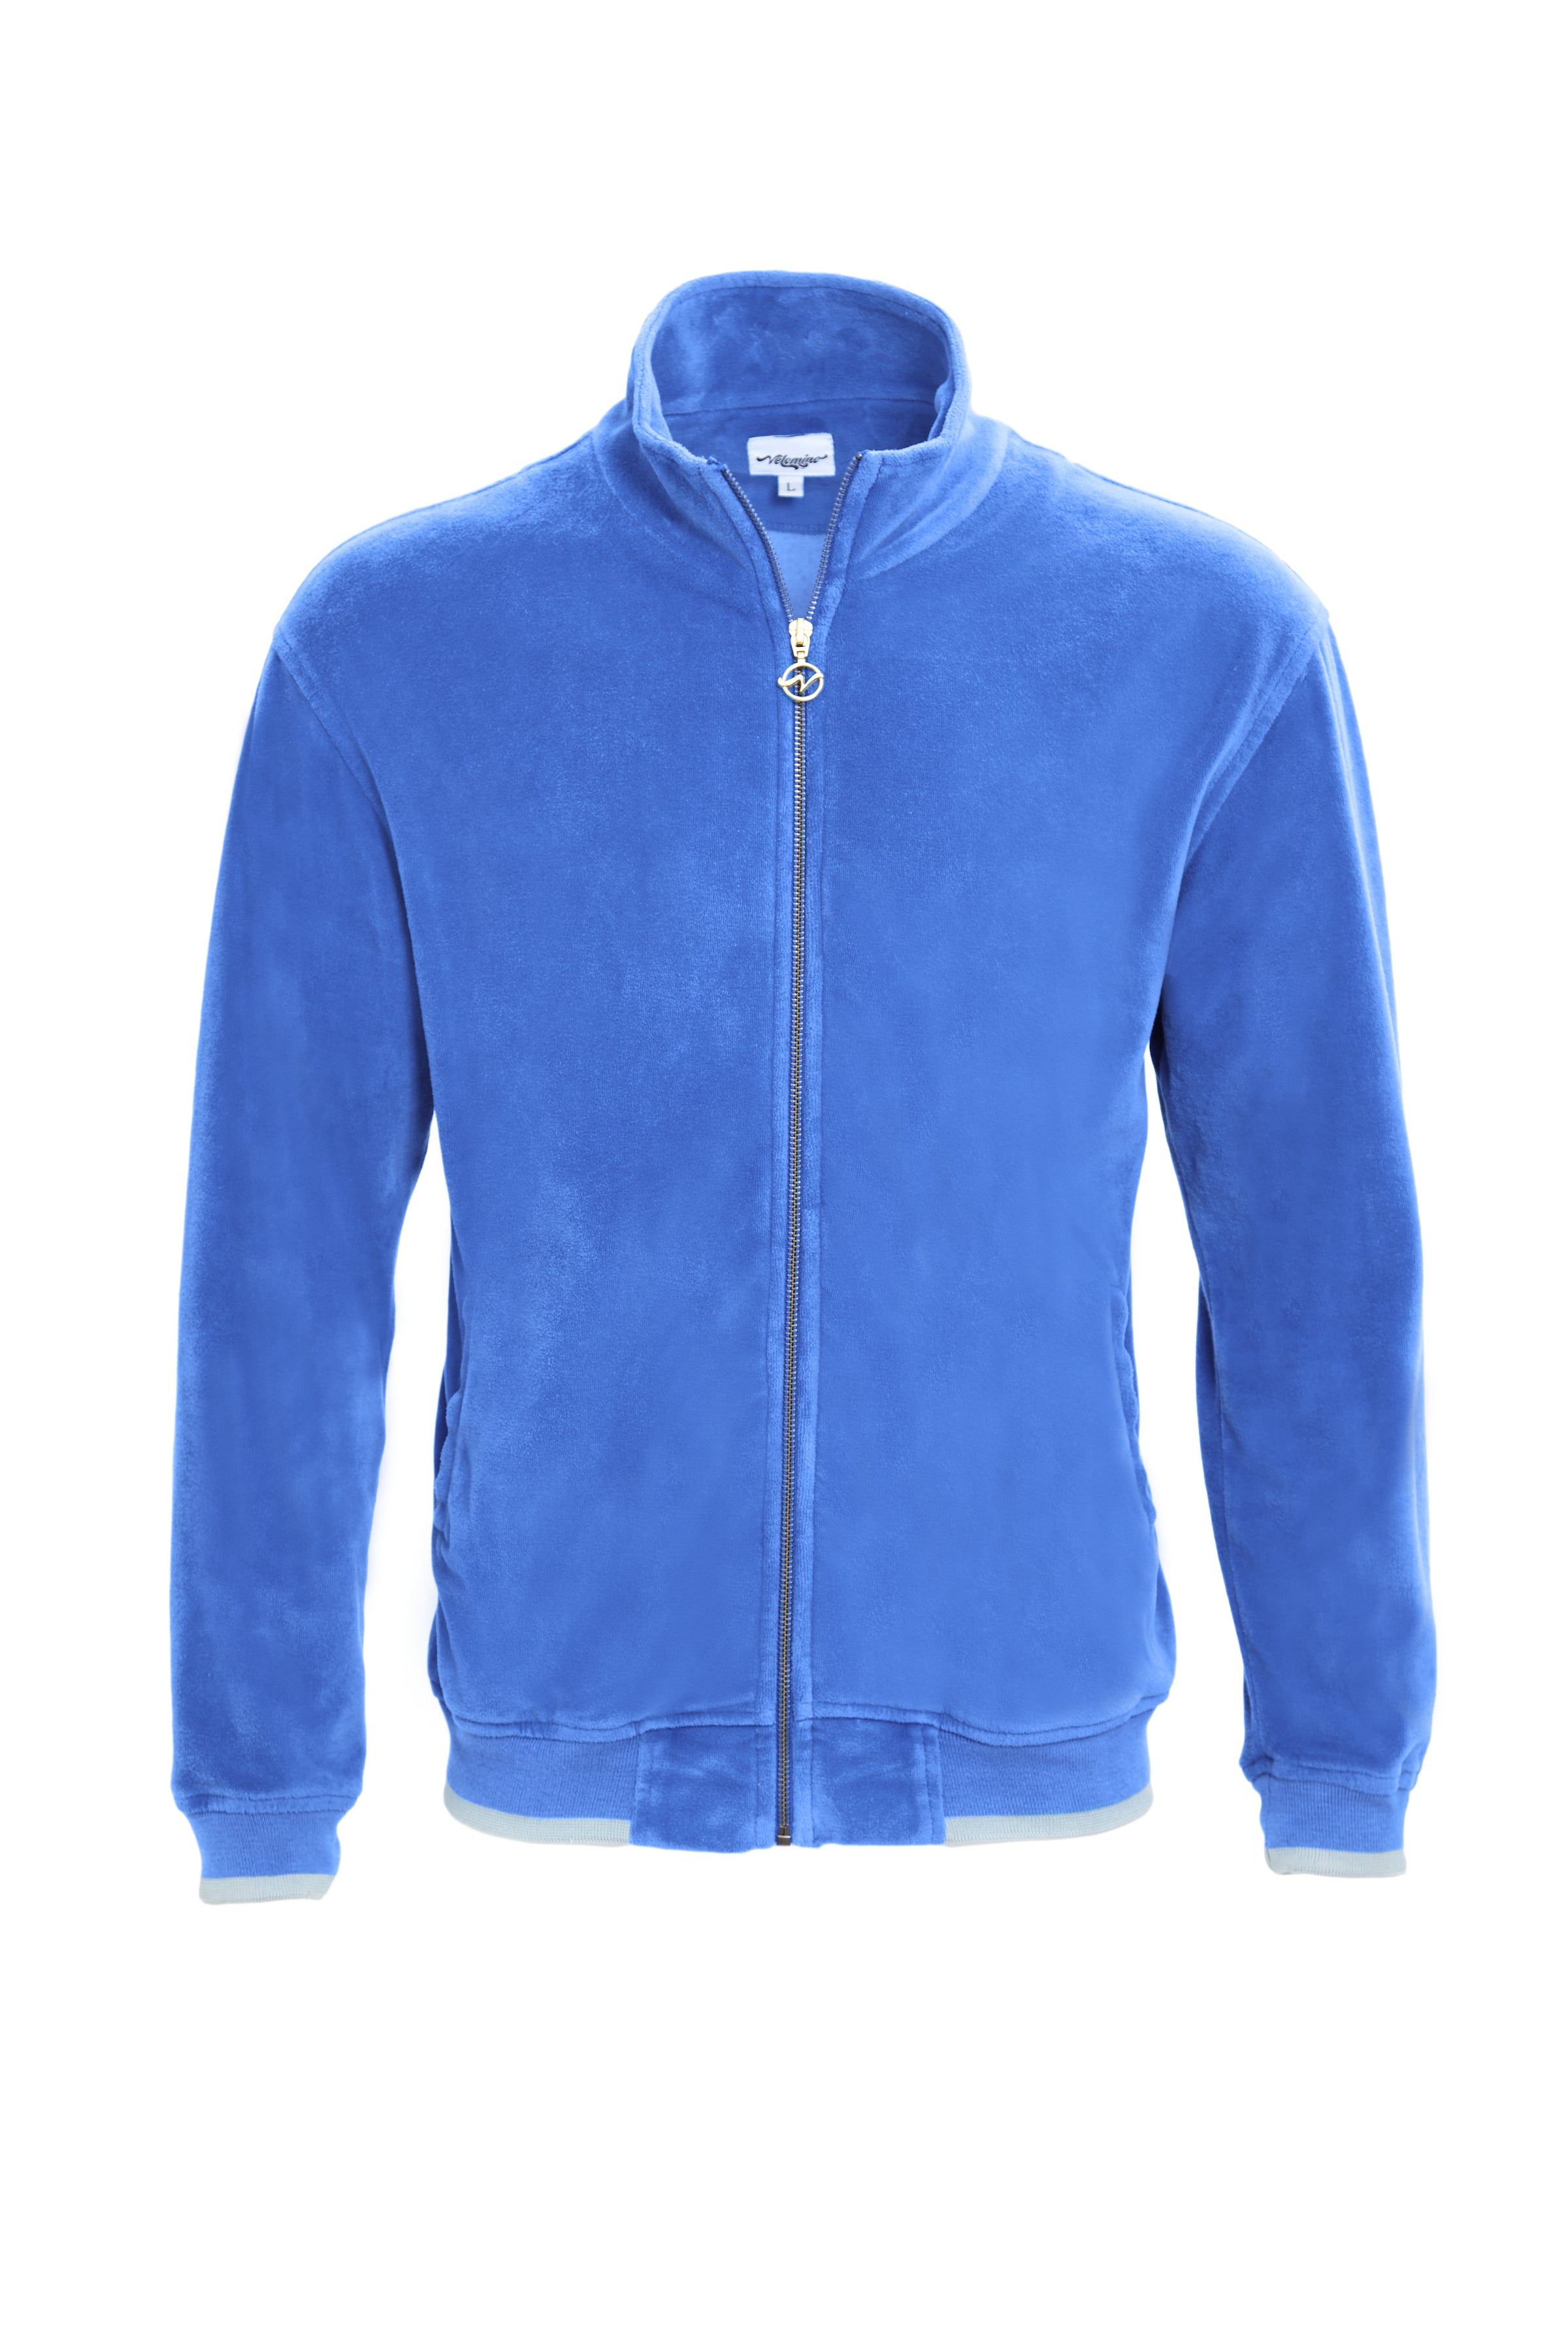 Royale Velour Hoodie, Royal Blue Track Jacket